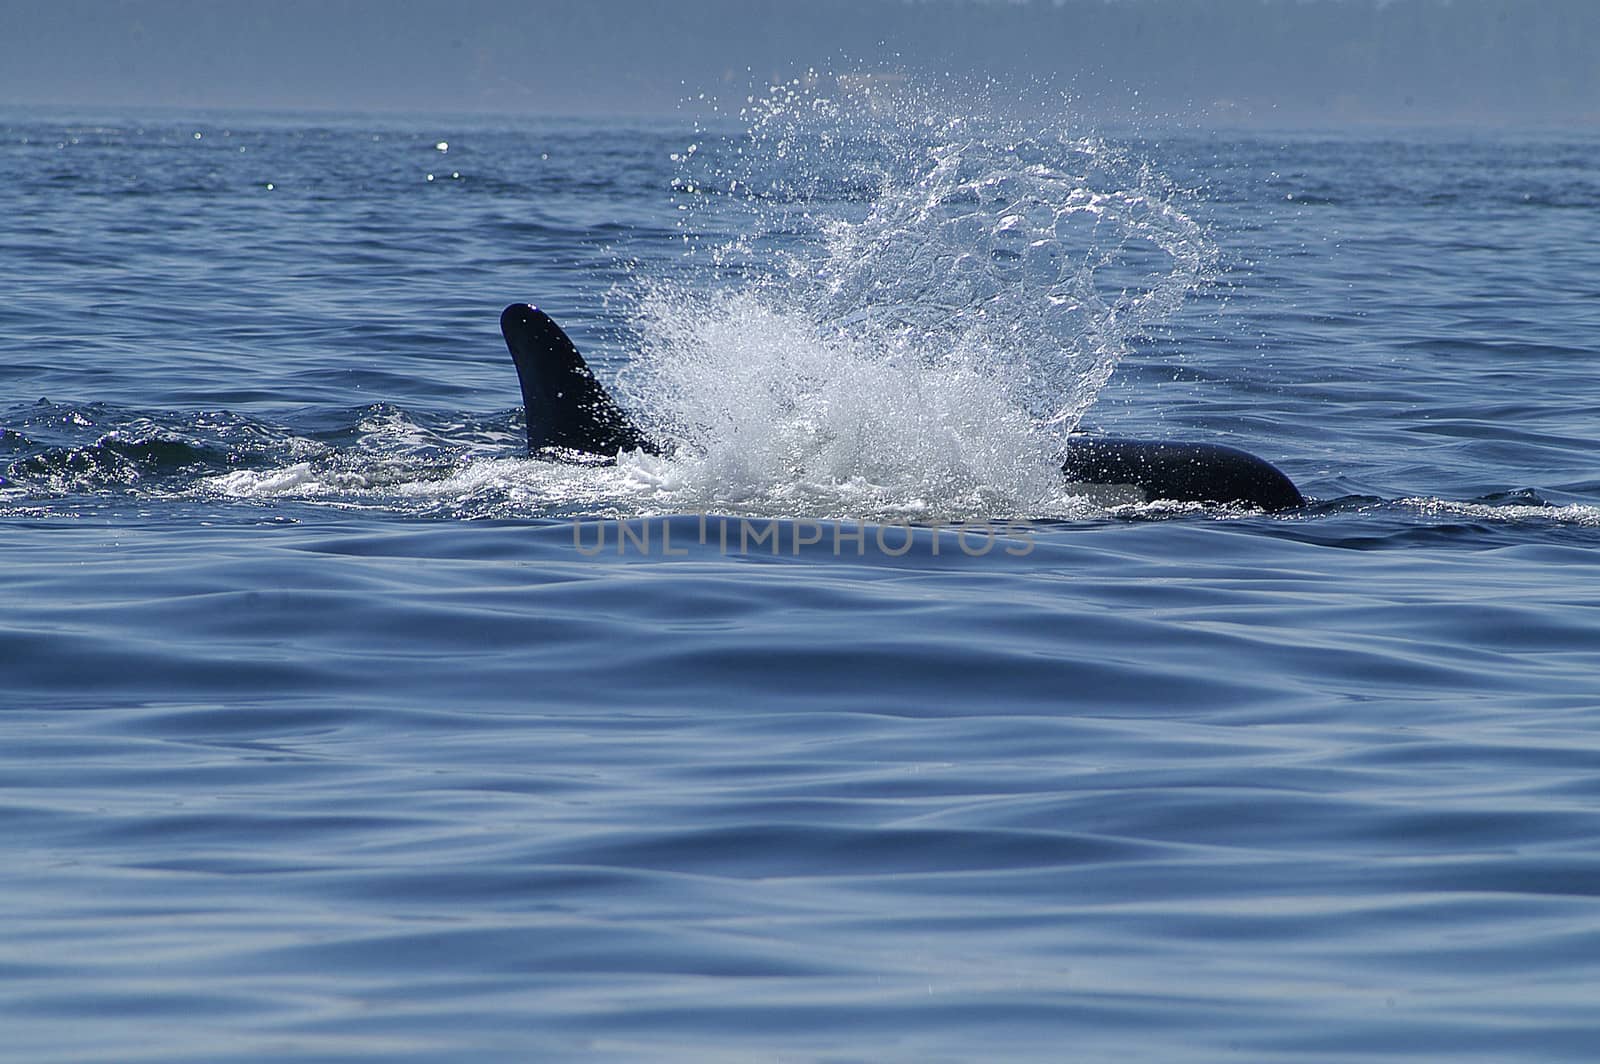 Orca (Killer Whale) feeding in San Juan Islands, Washington